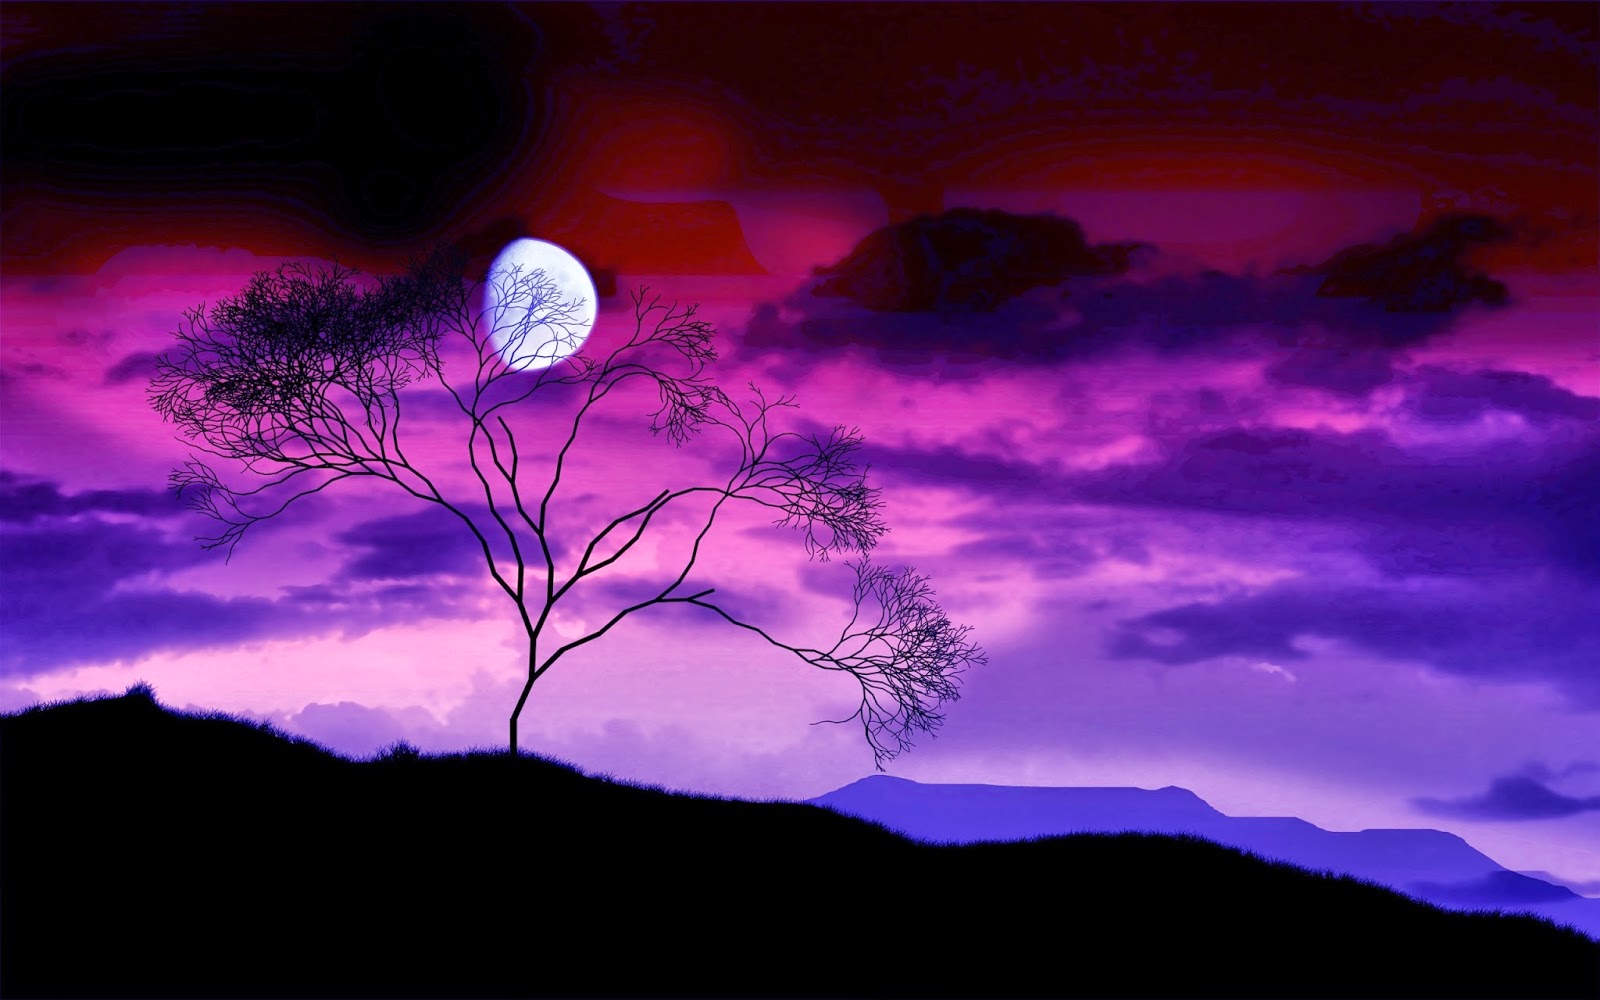 Beauty Of Moonlight At Night Sky Near Sea Poetic Nature